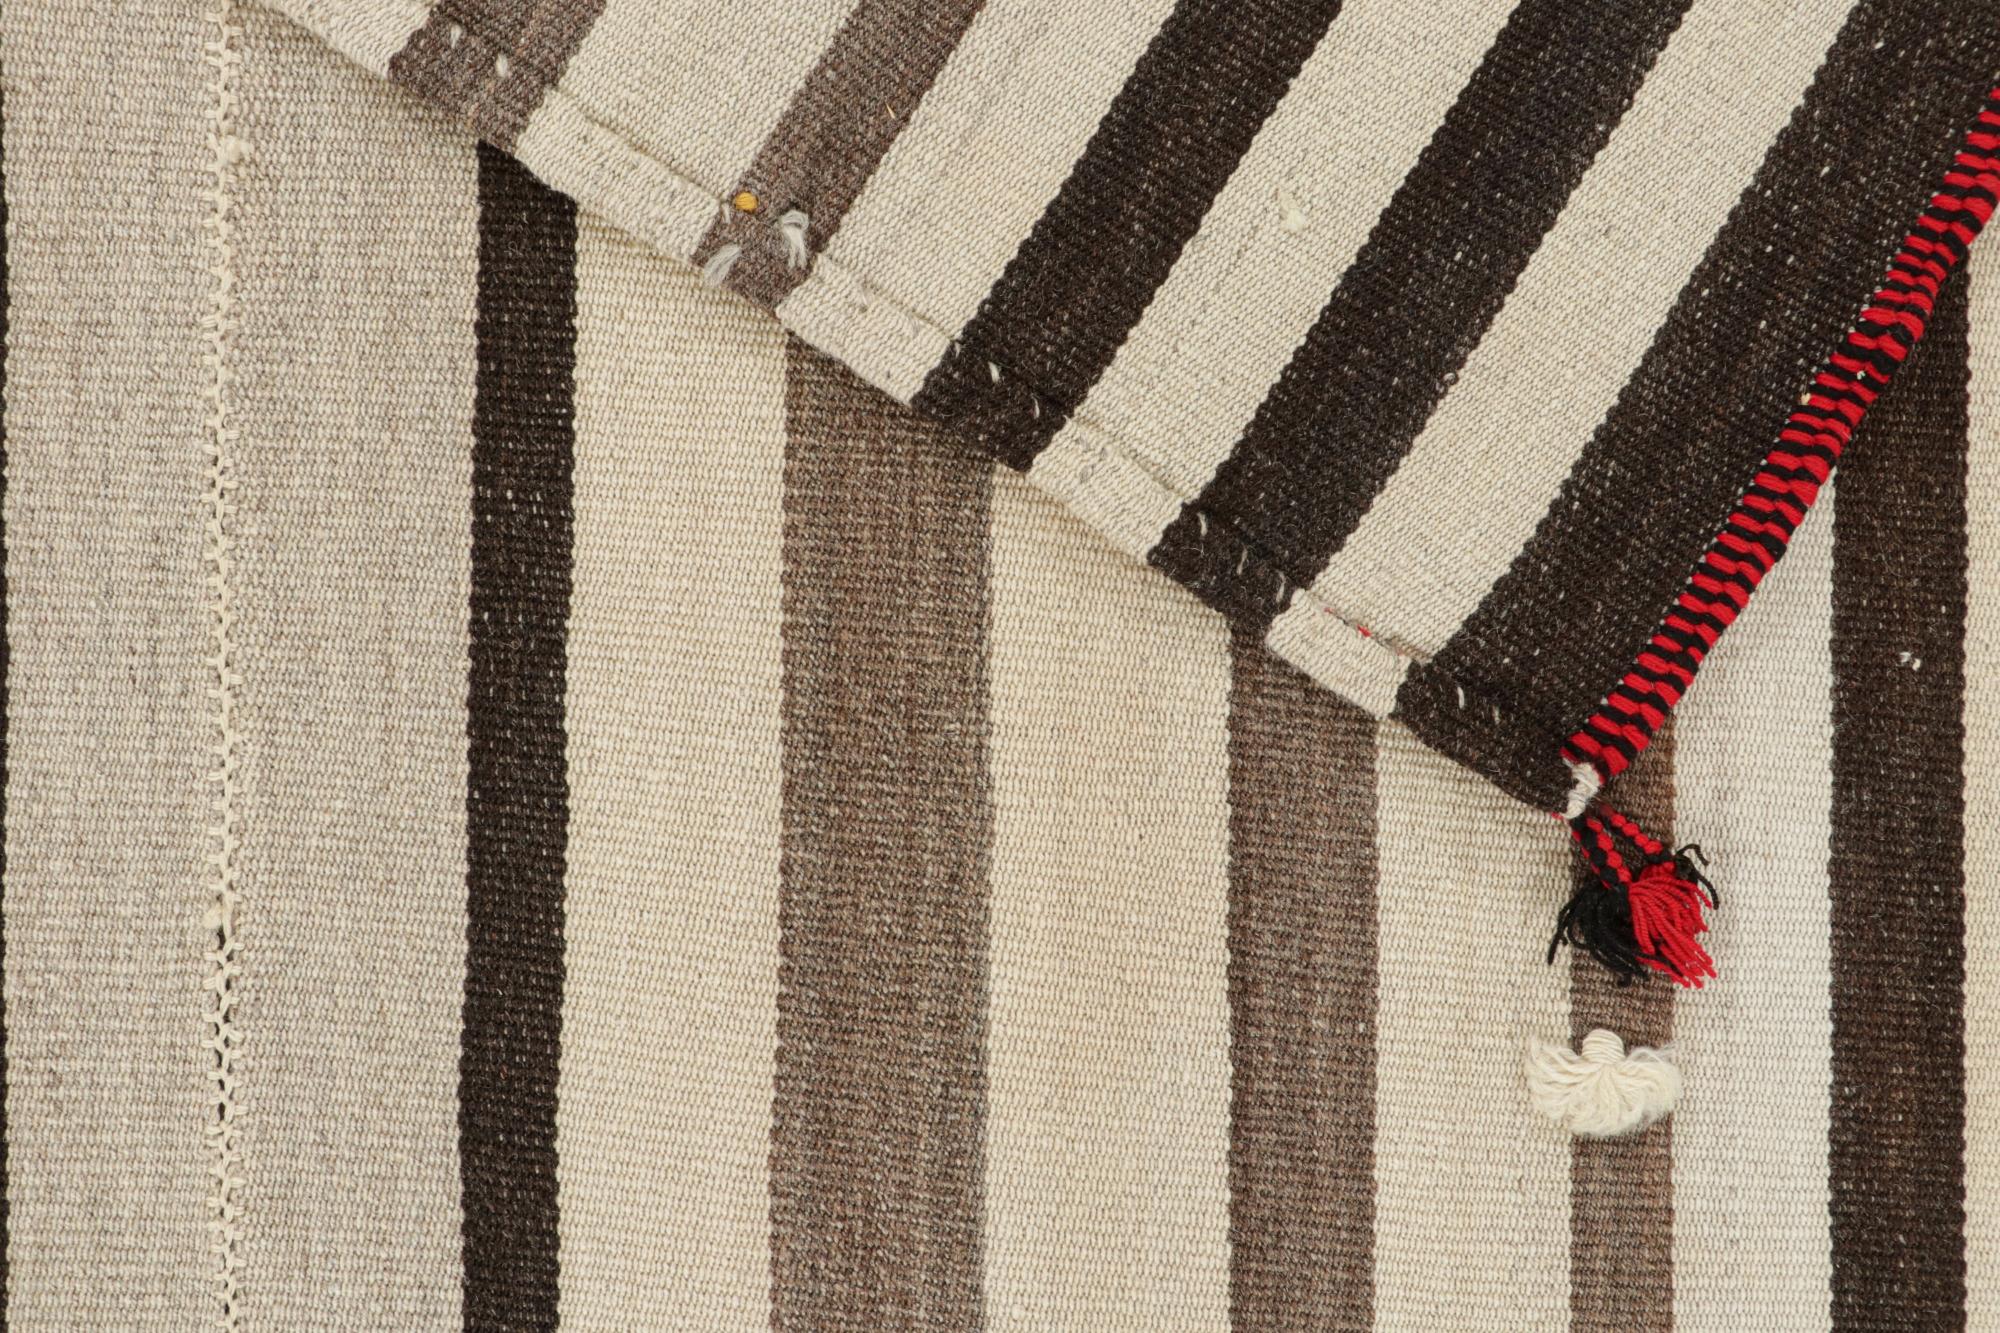 Wool Vintage Persian Kilim in Beige-Brown Stripes, Panel Style For Sale